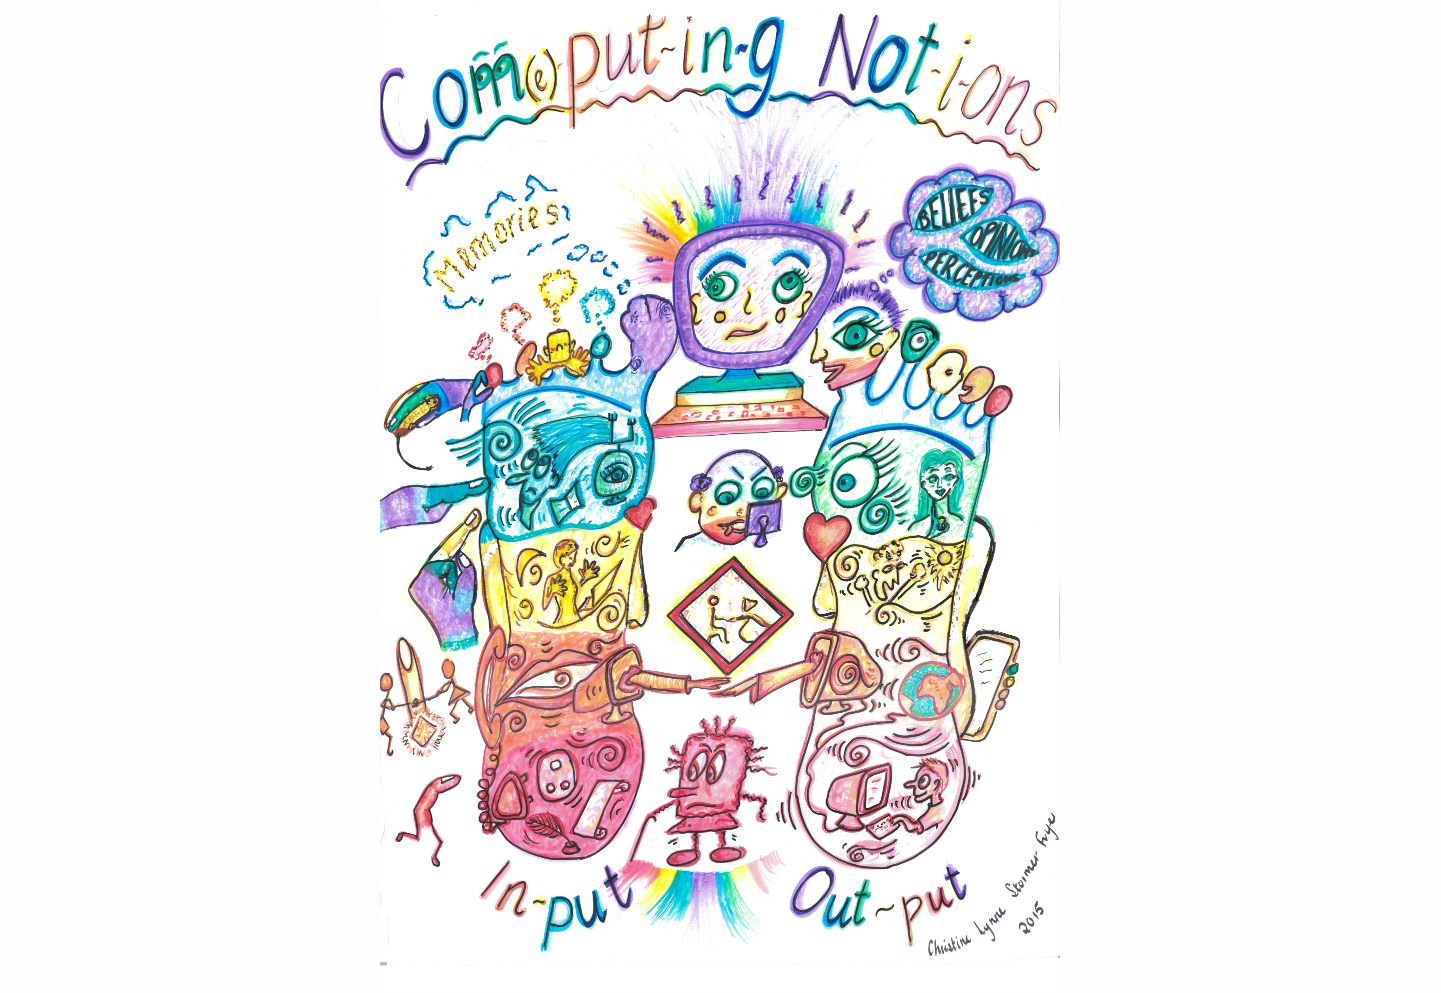 19 Computing notions